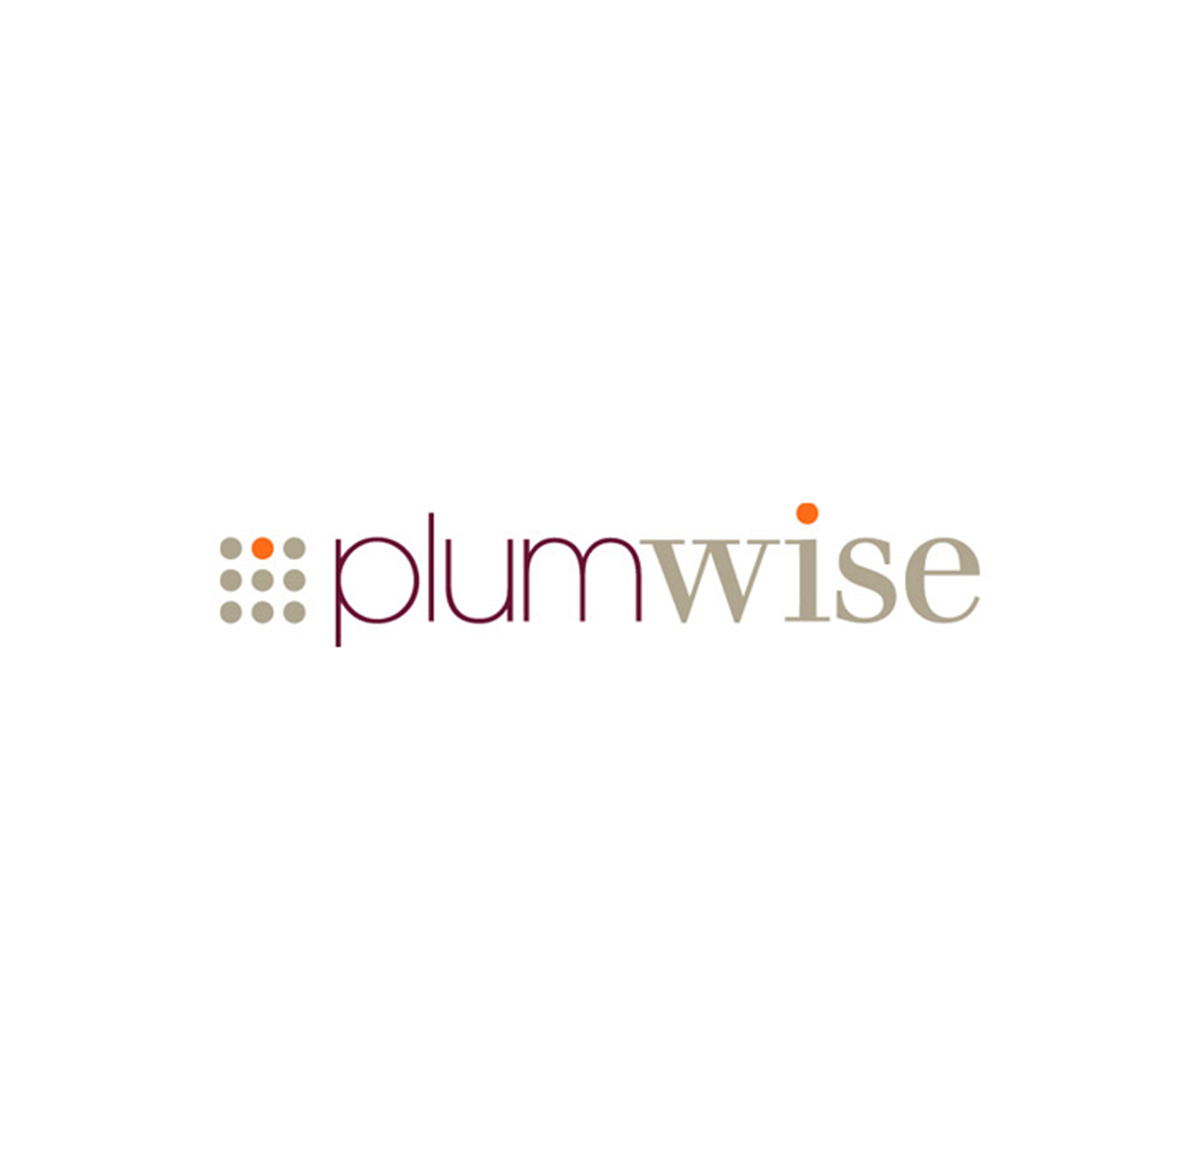 Plumwise logo